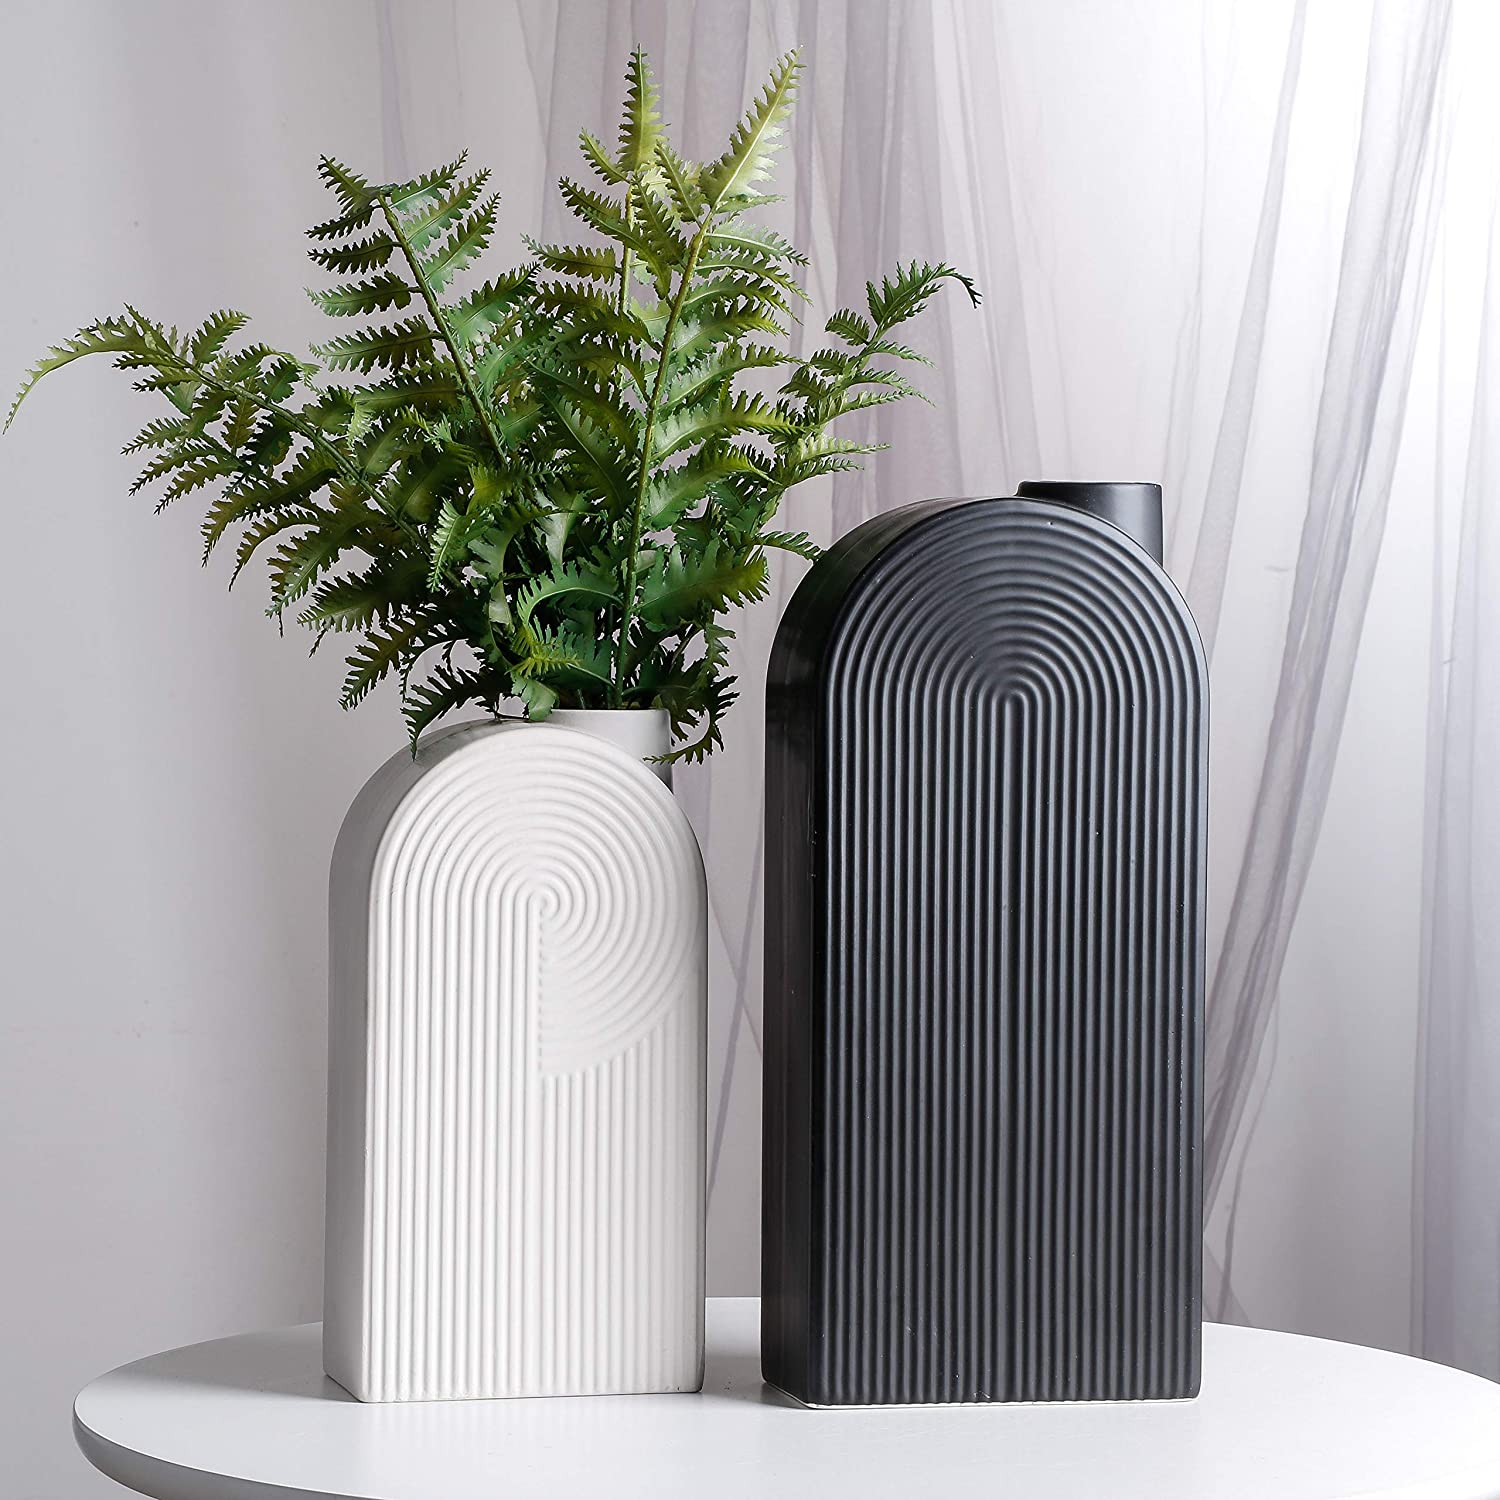 eramic Modern Vase, Black and White Geometric Decorative Vases for Home Decor